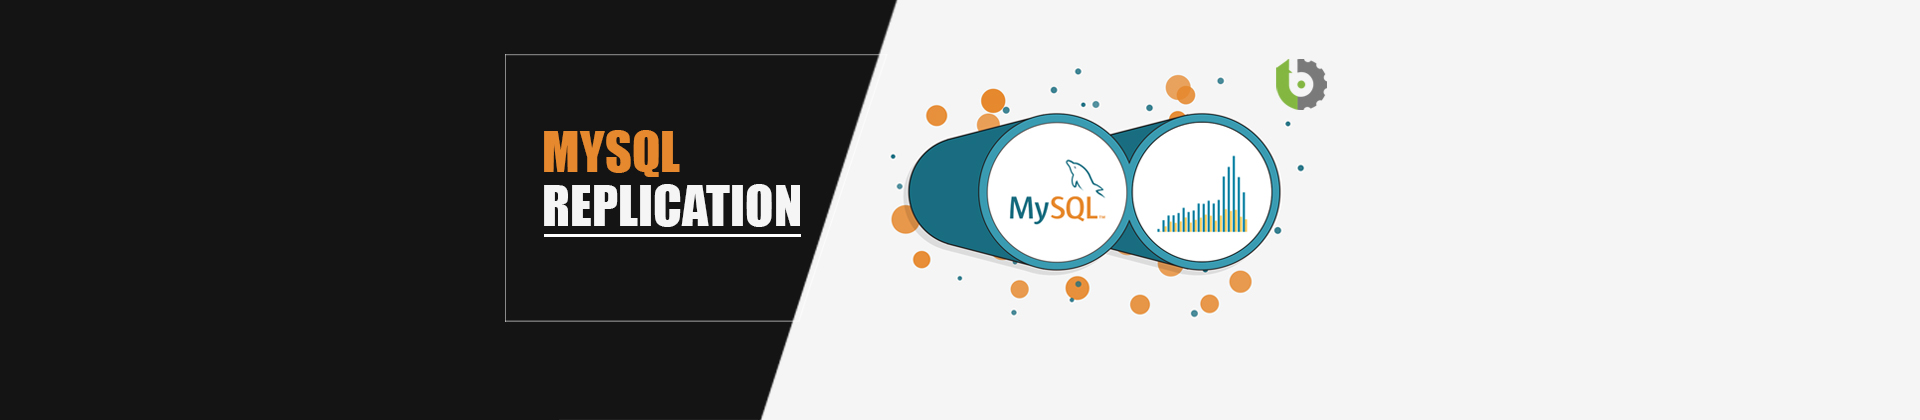 MYSQL Replication